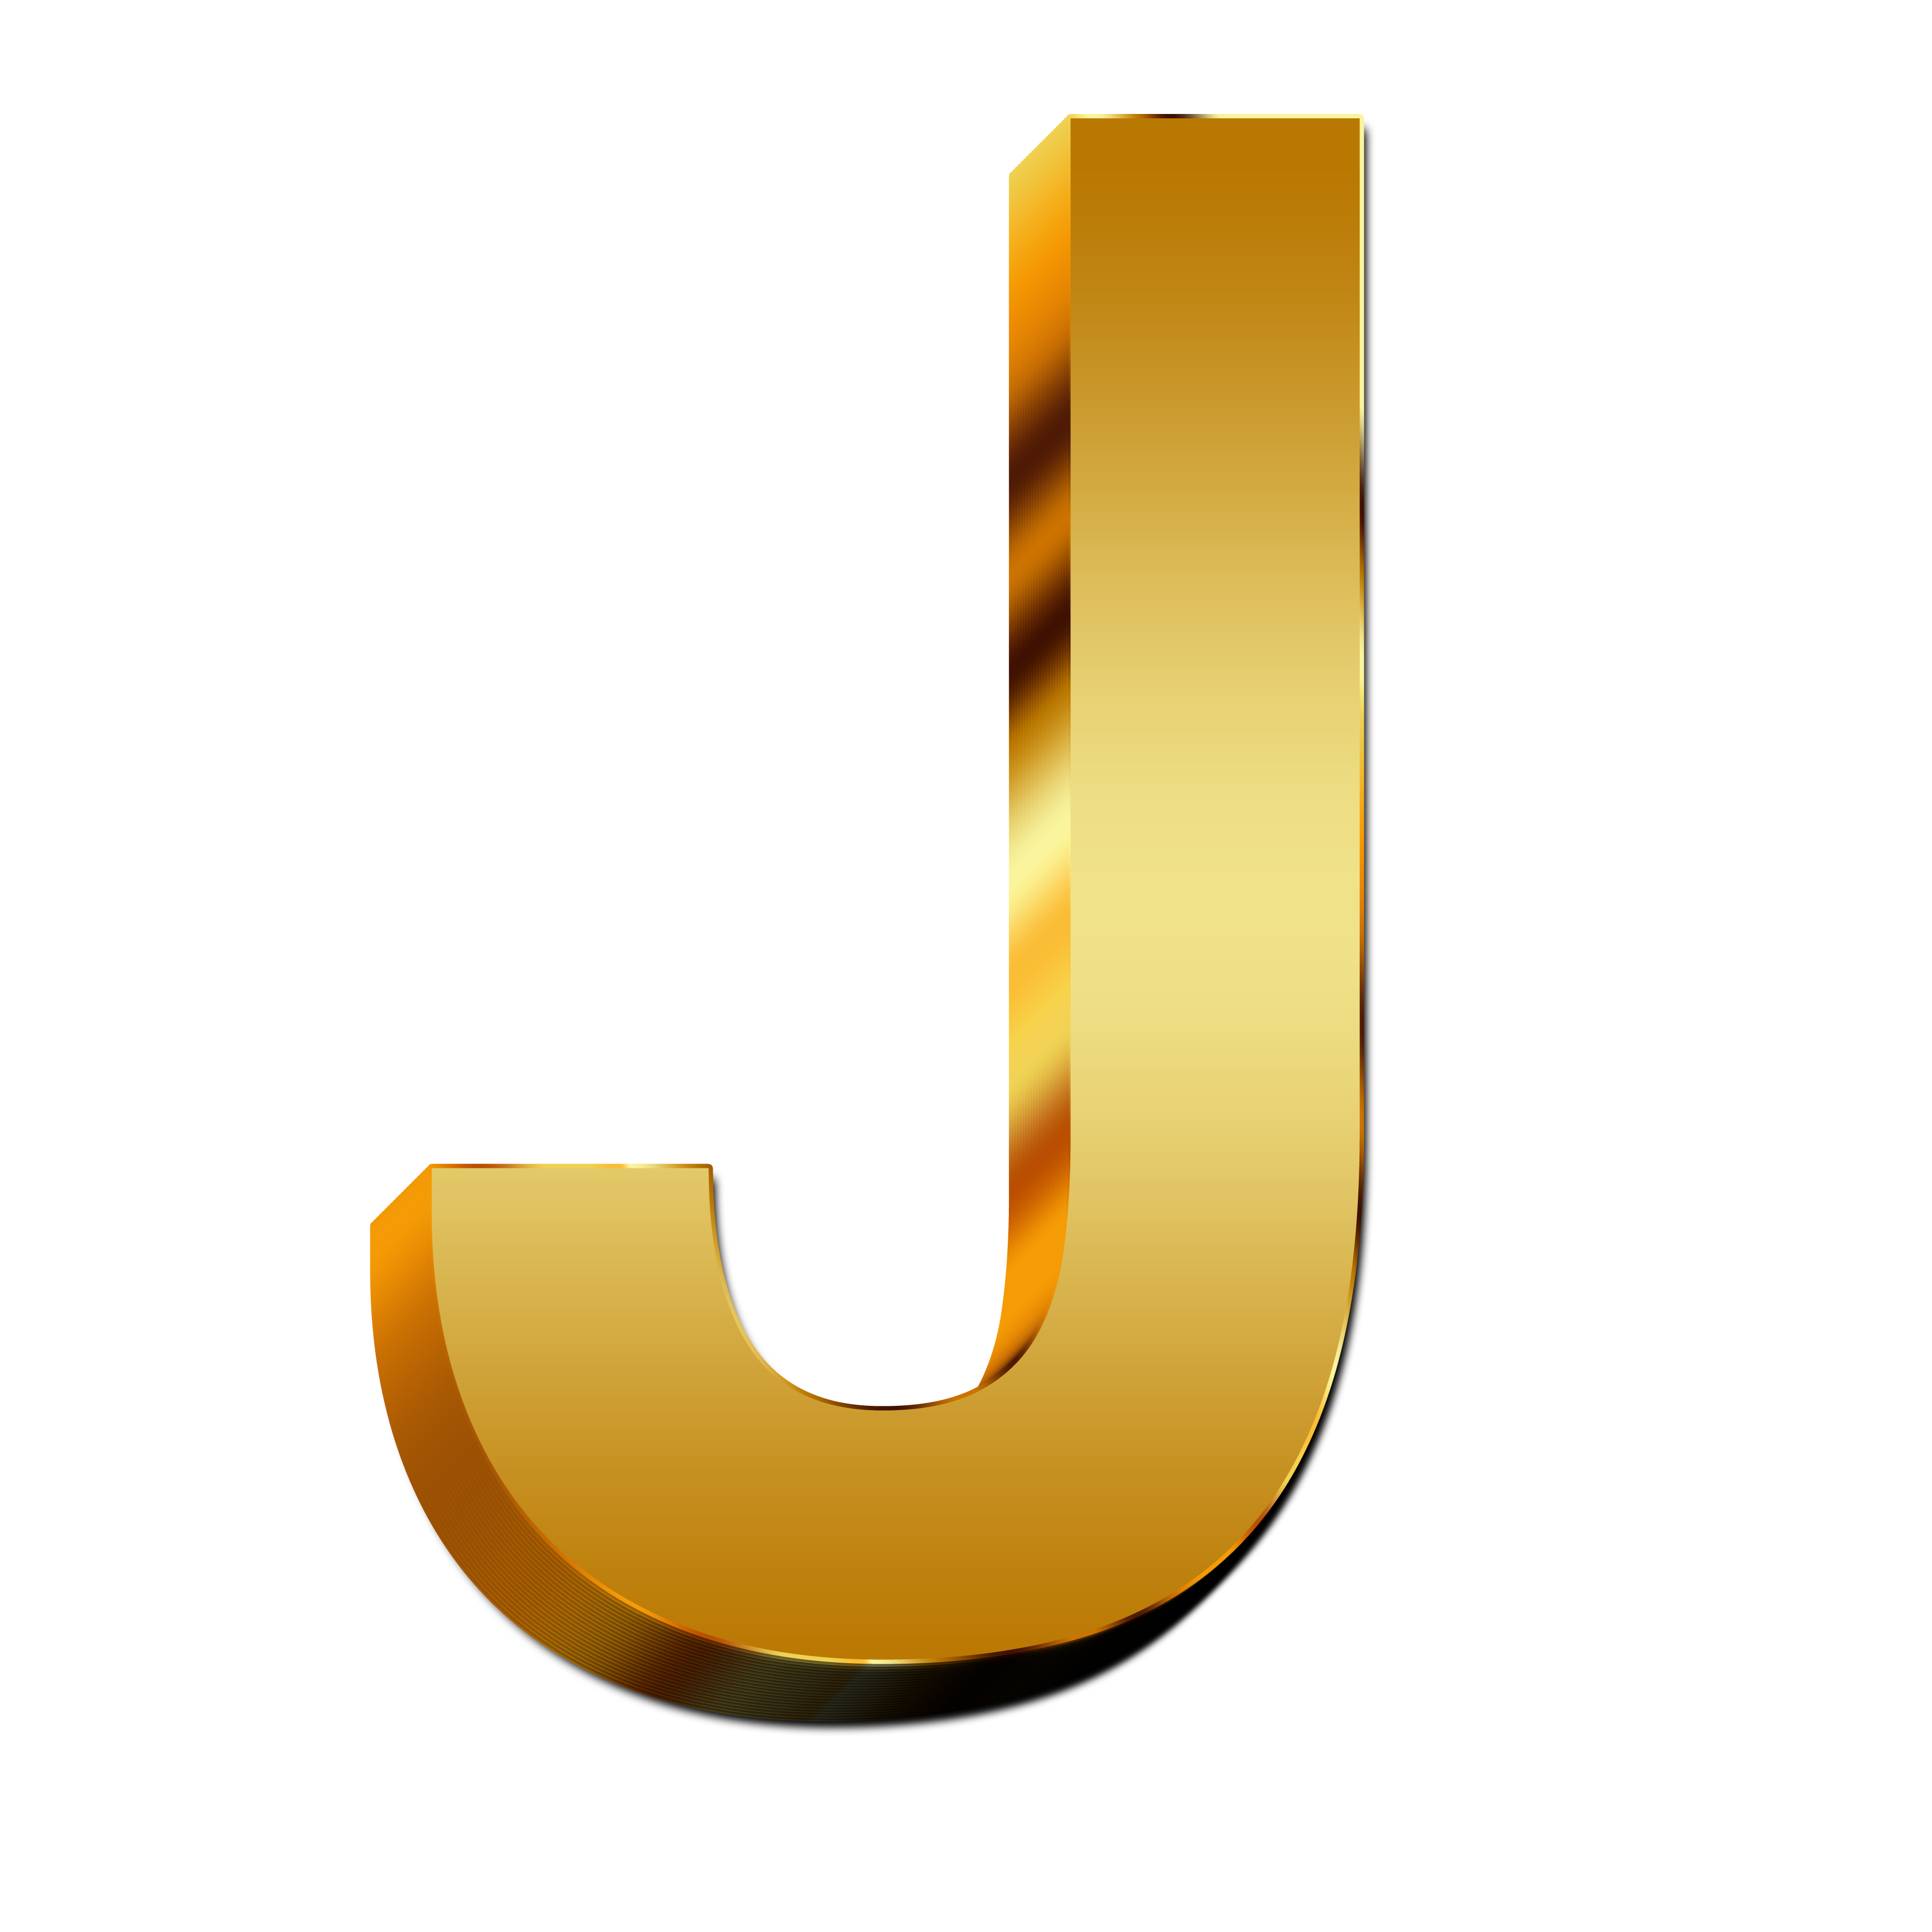 Letter J PNG images, Free Download J icon - Free Transparent PNG Logos